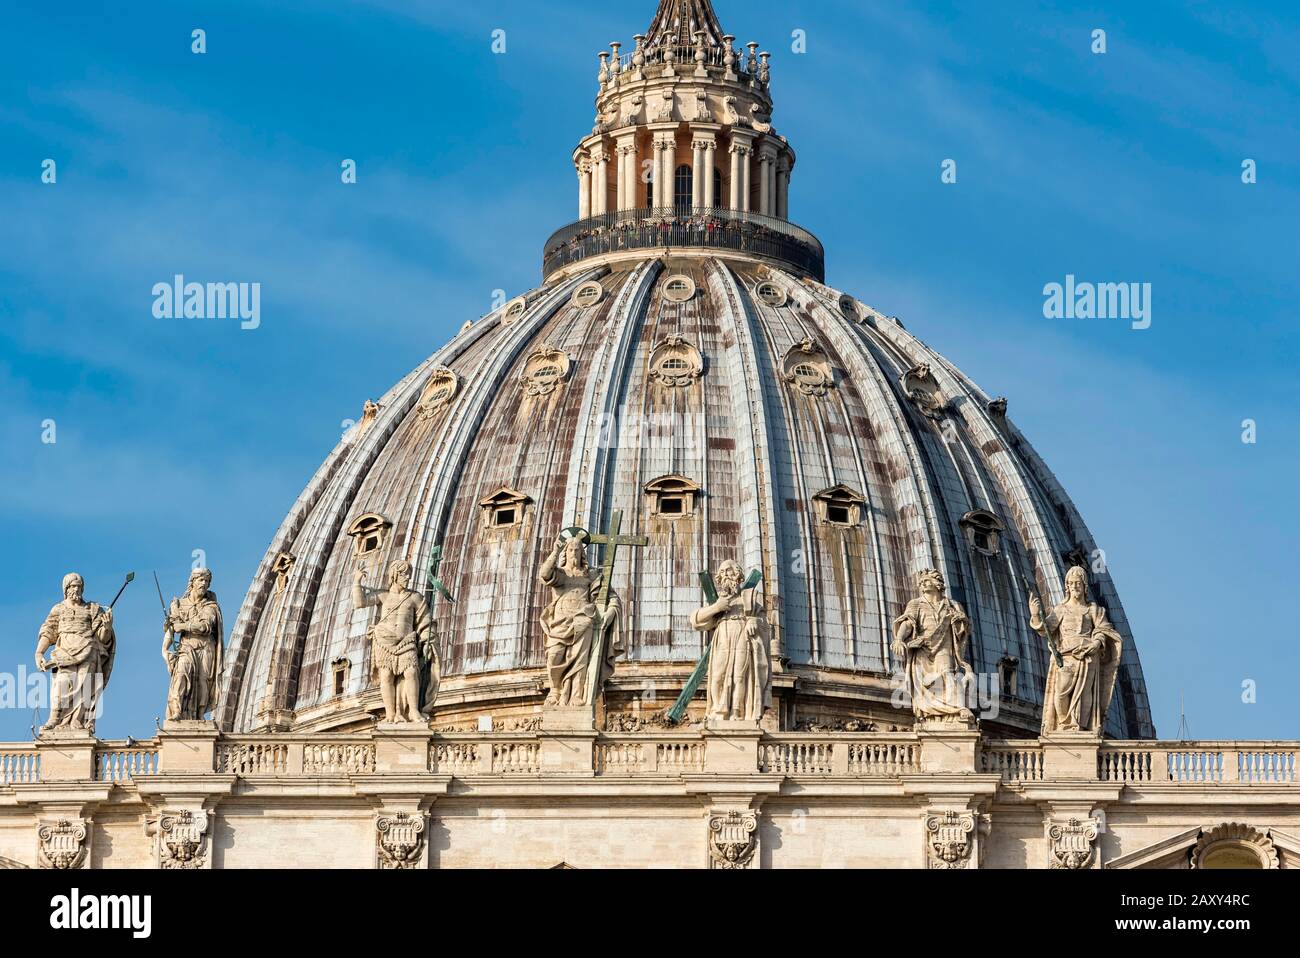 Cupola of St. Peter's Basilica with statues of Saints Thomas, James, John the Baptist, Jesus Christ, Andrew, John the Evangelist and James the Less Stock Photo